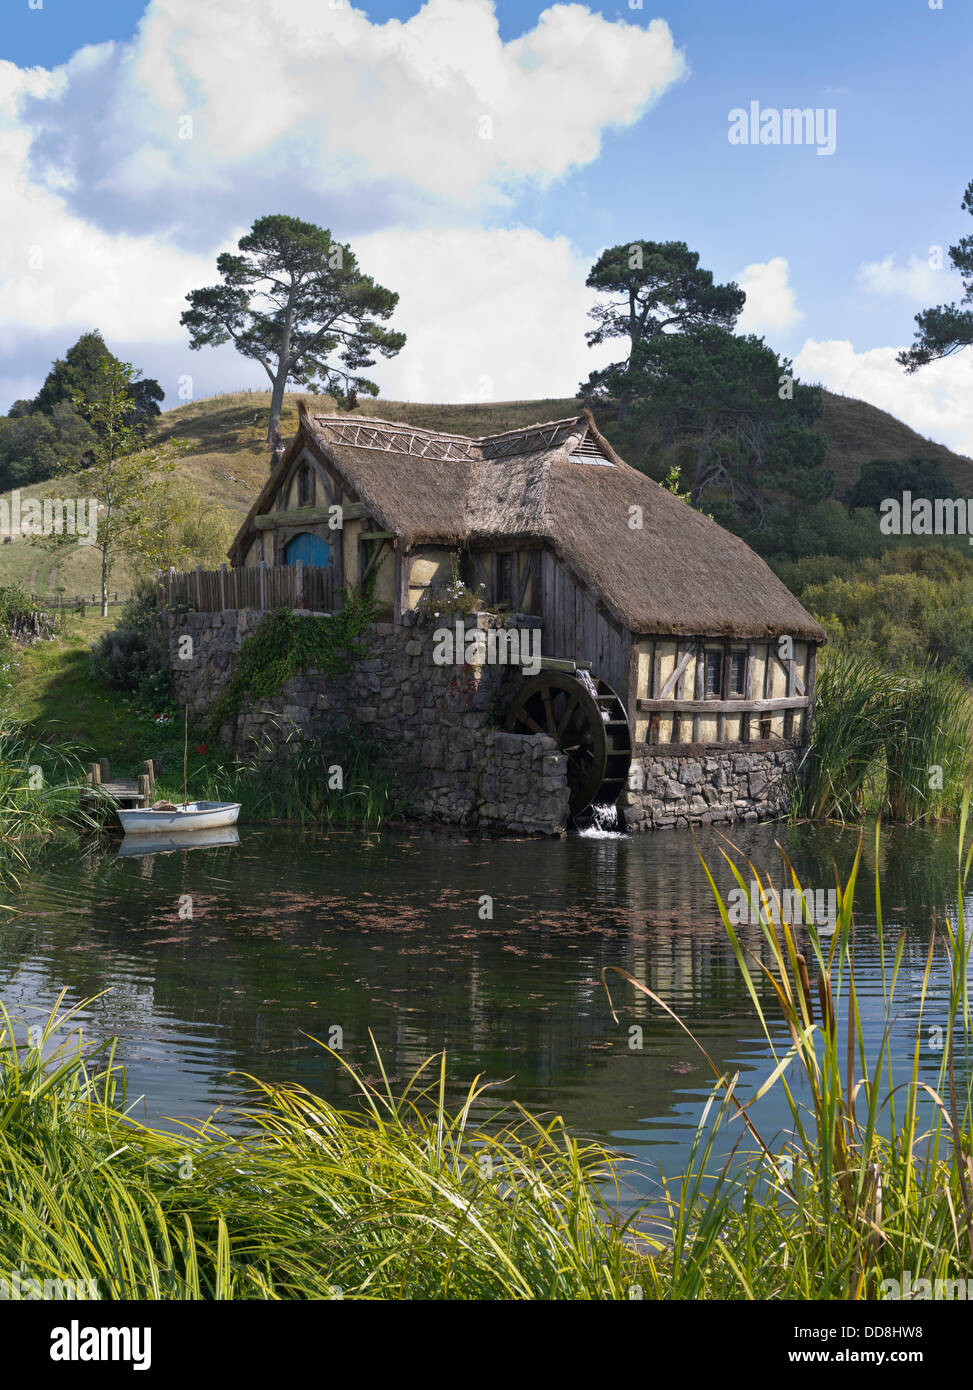 Dh Signore degli Anelli HOBBITON NUOVA ZELANDA Hobbit mill set cinematografico film film sito hobbit Foto Stock